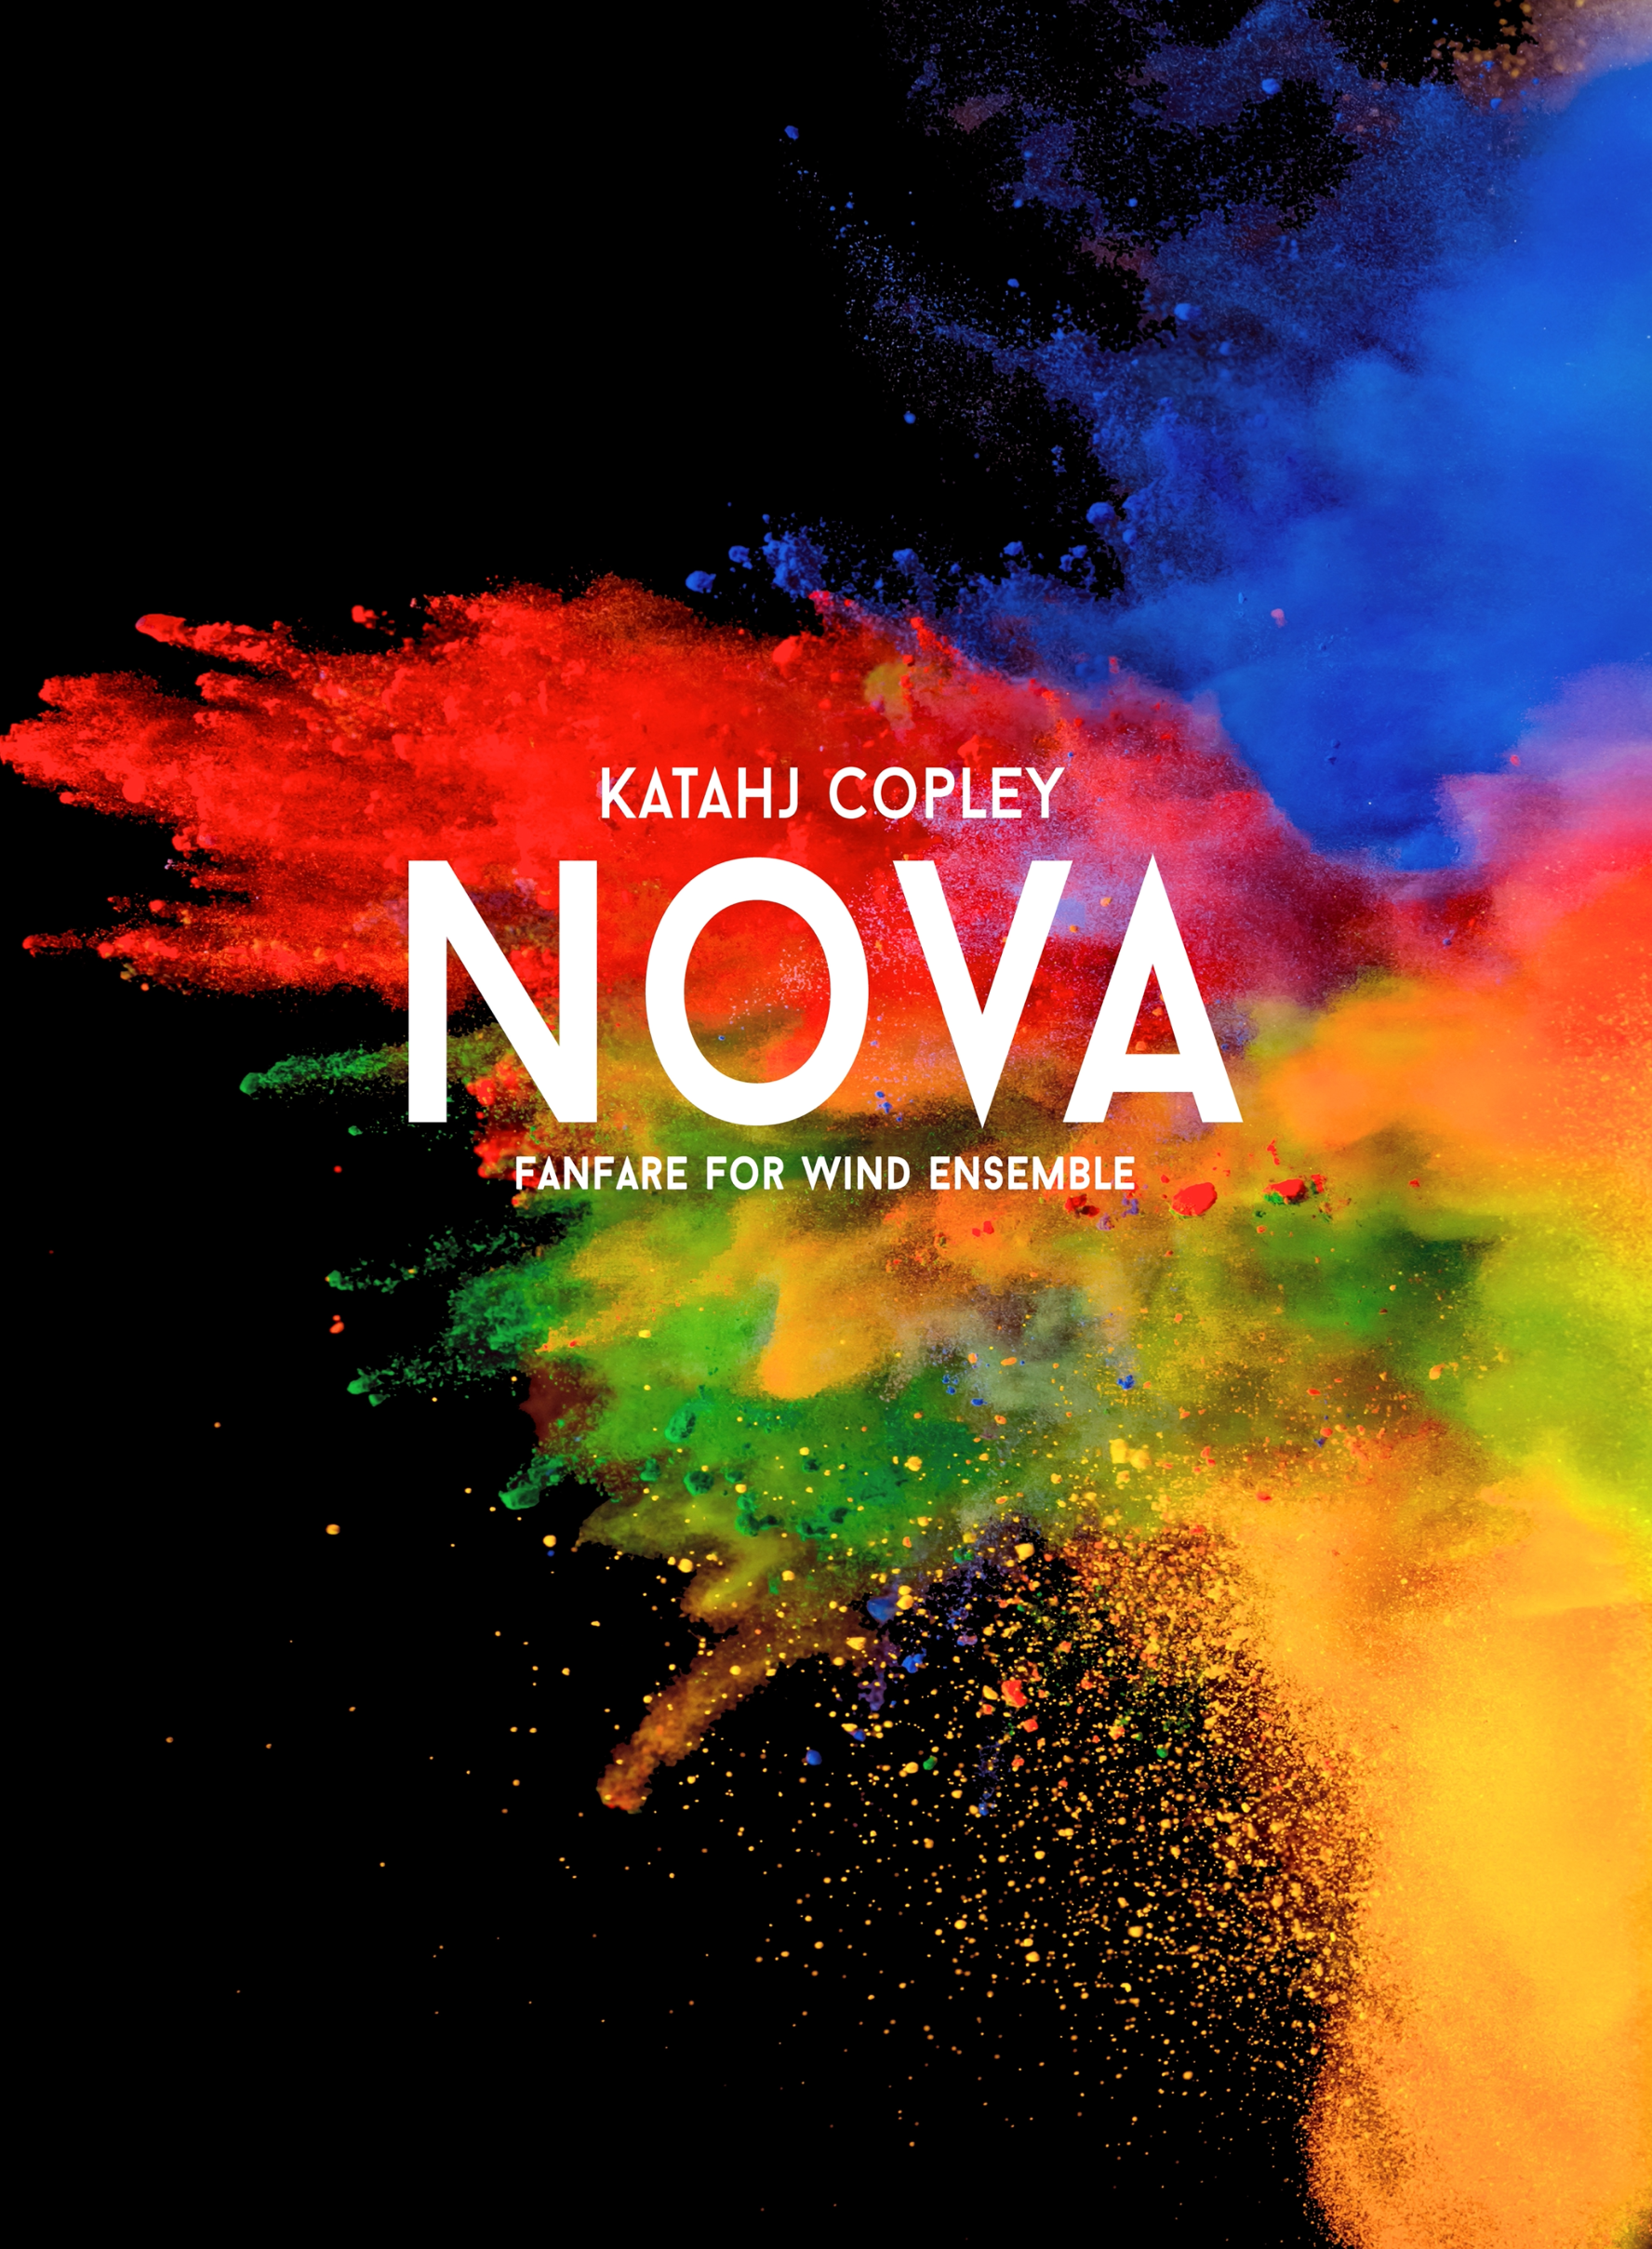 Nova (Score Only) by Katahj Copley